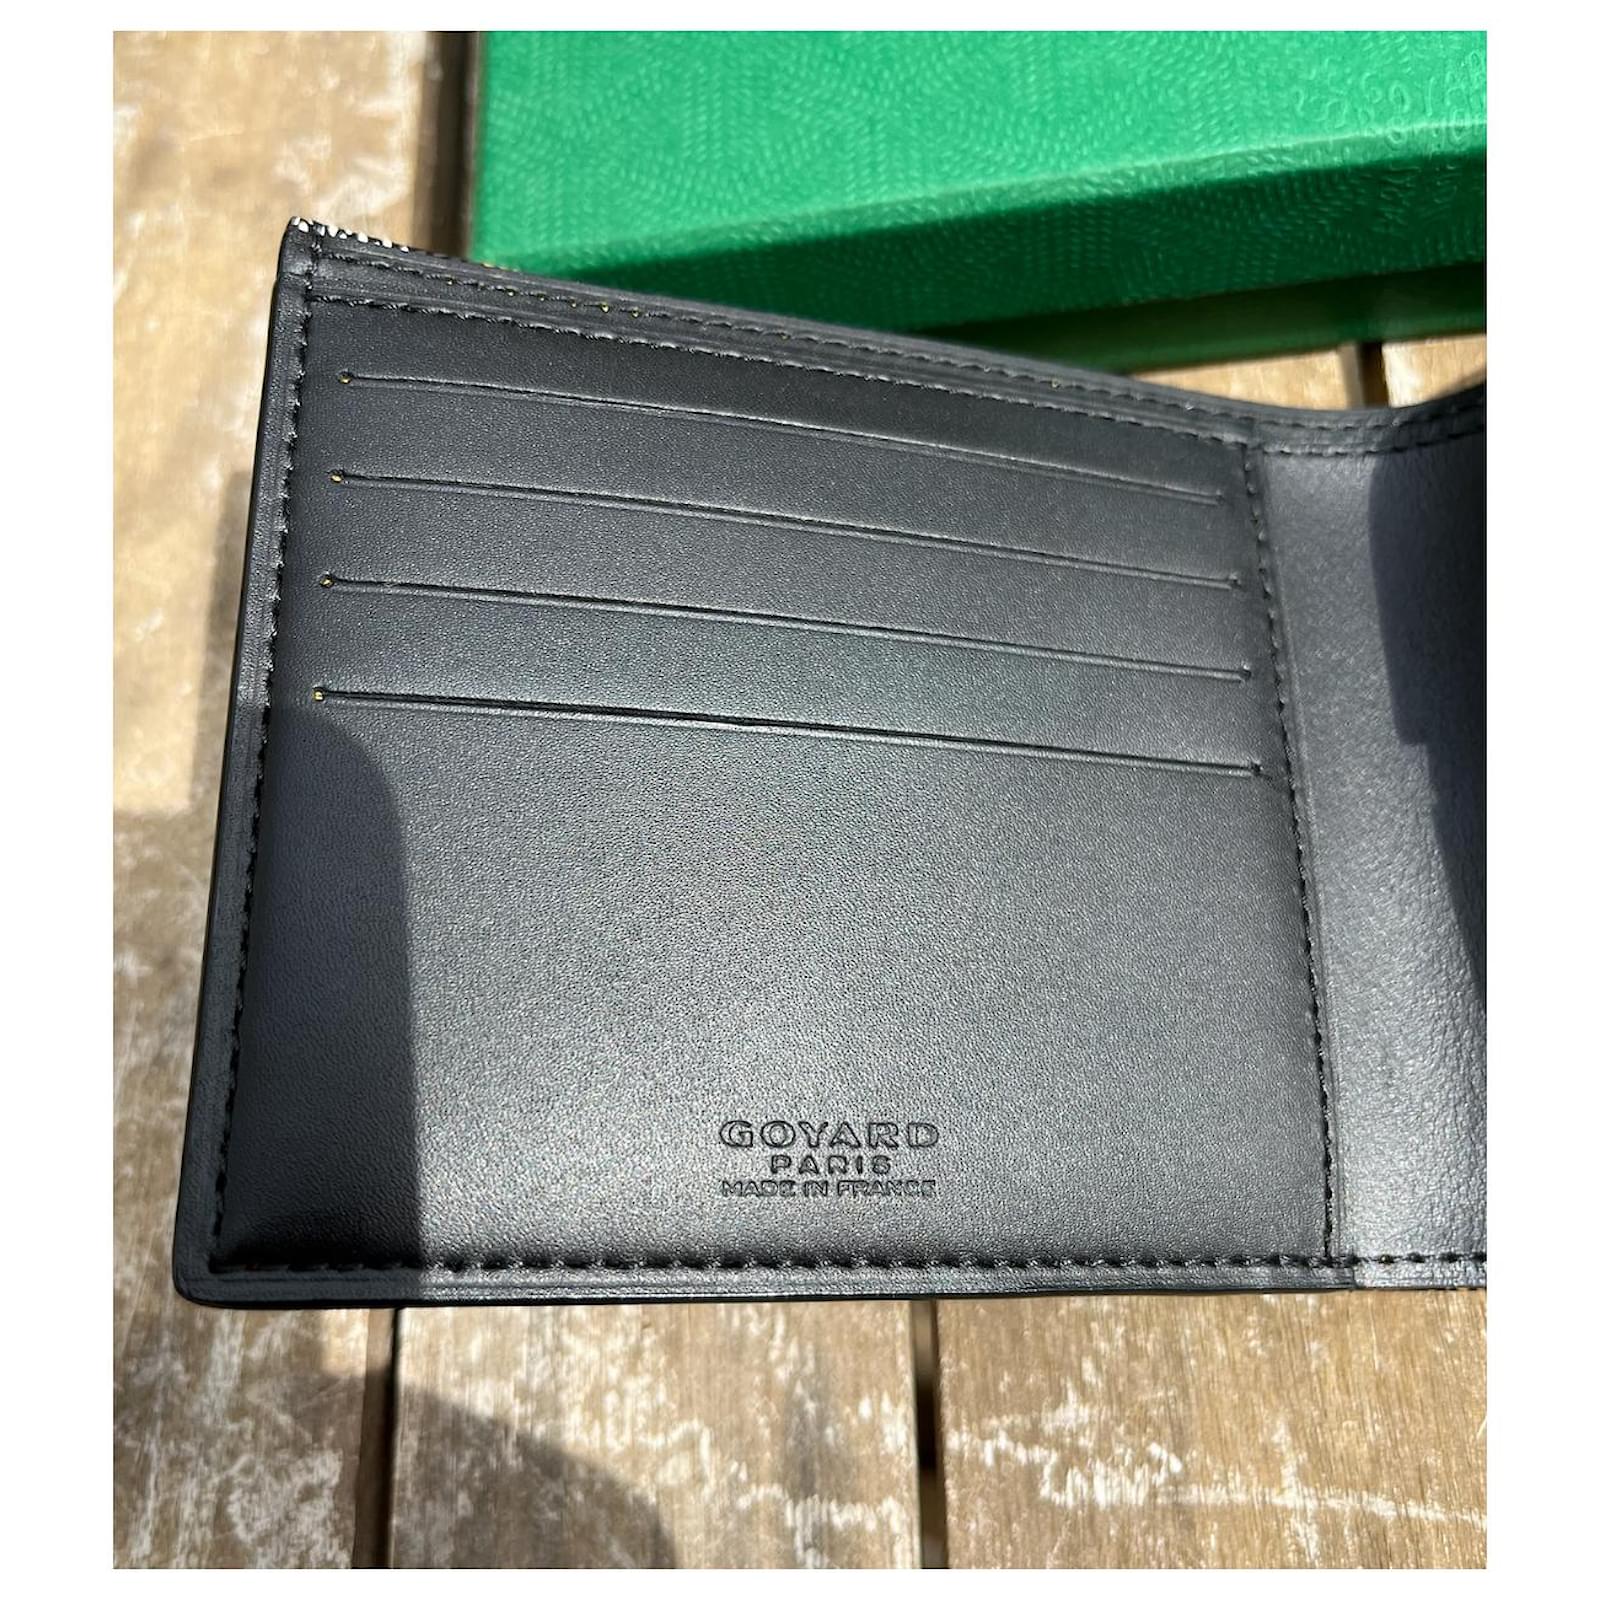 Maison Goyard - Money Clipper Wallet (Black)